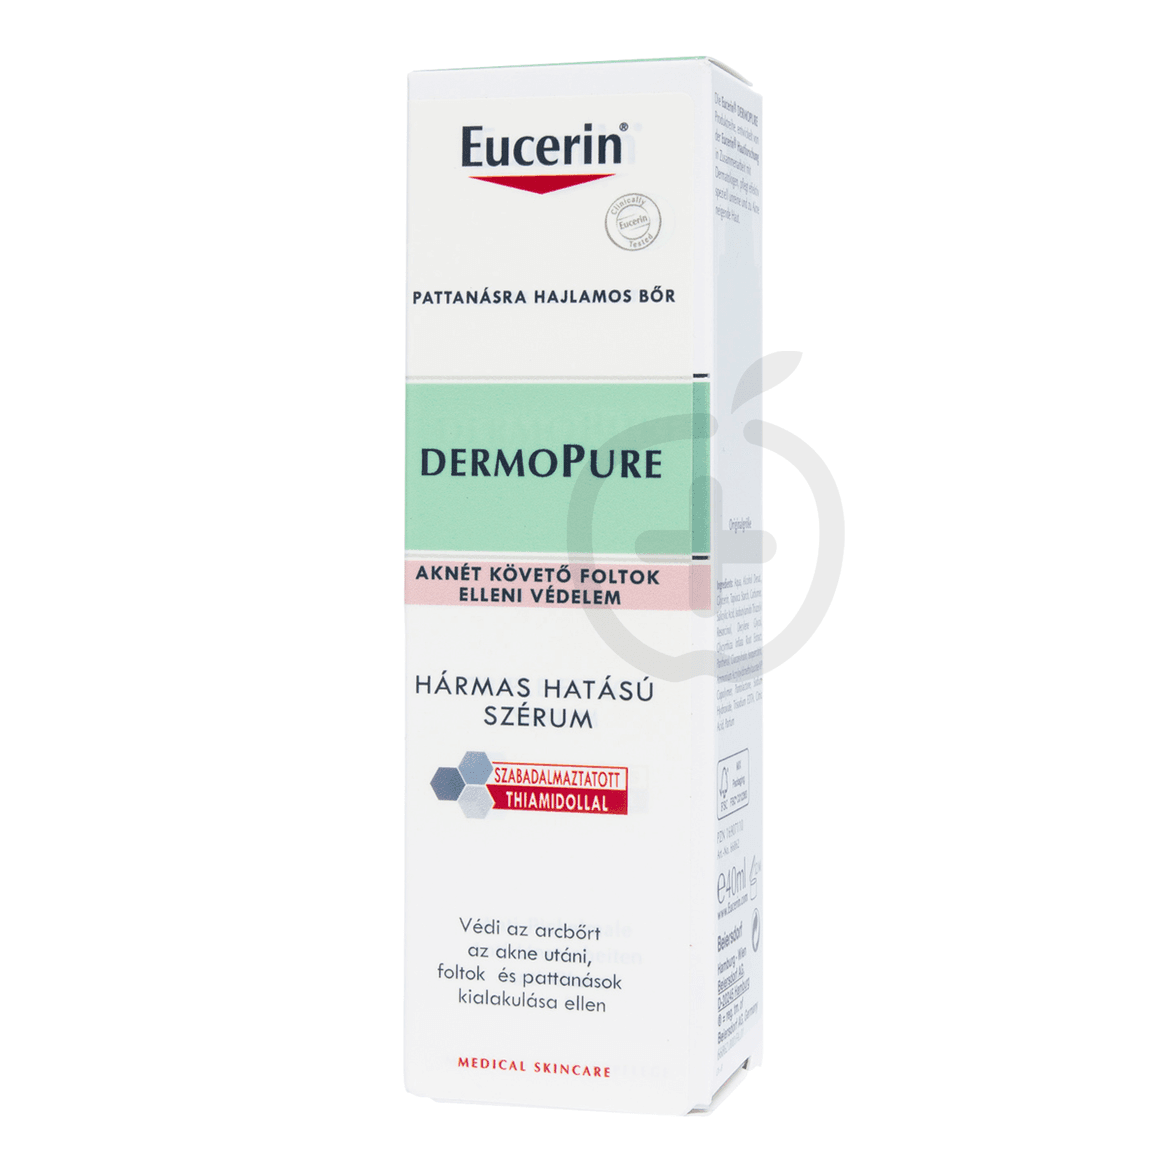 Eucerin DermoPure hármas hatású szérum